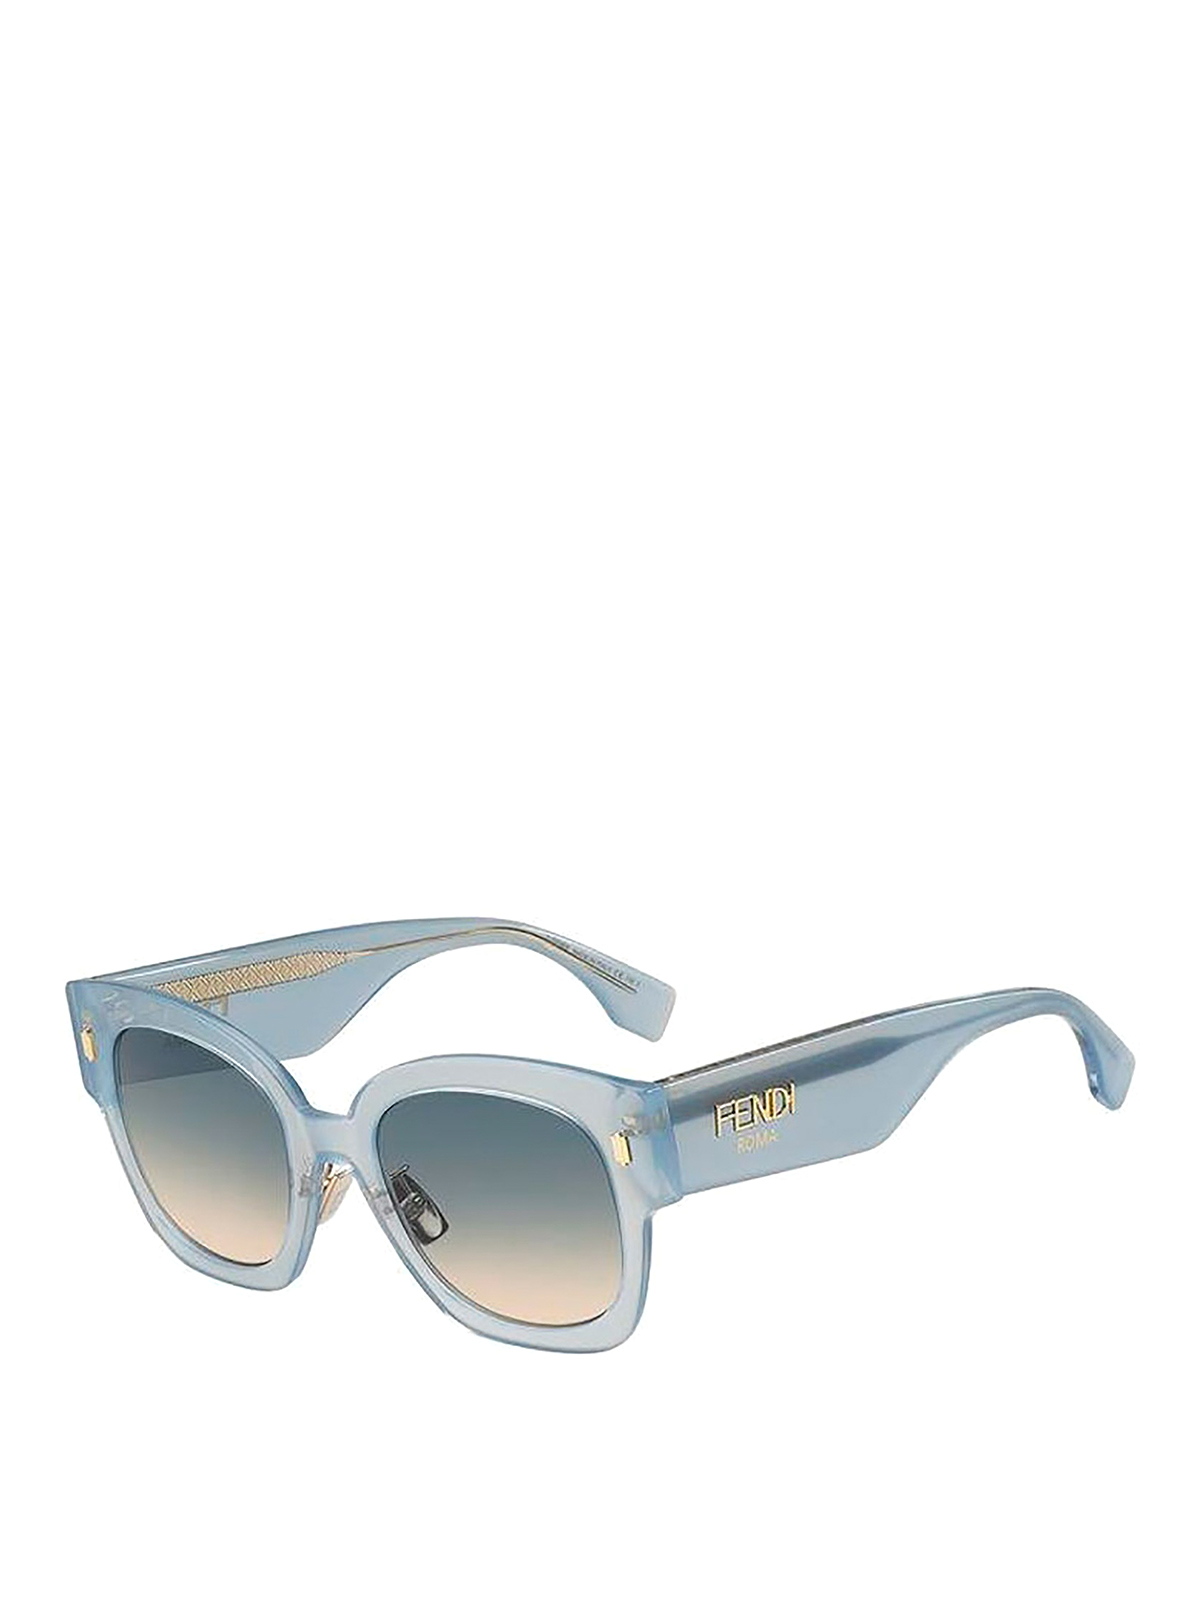 Fendi Roma Sunglasses In Light Blue